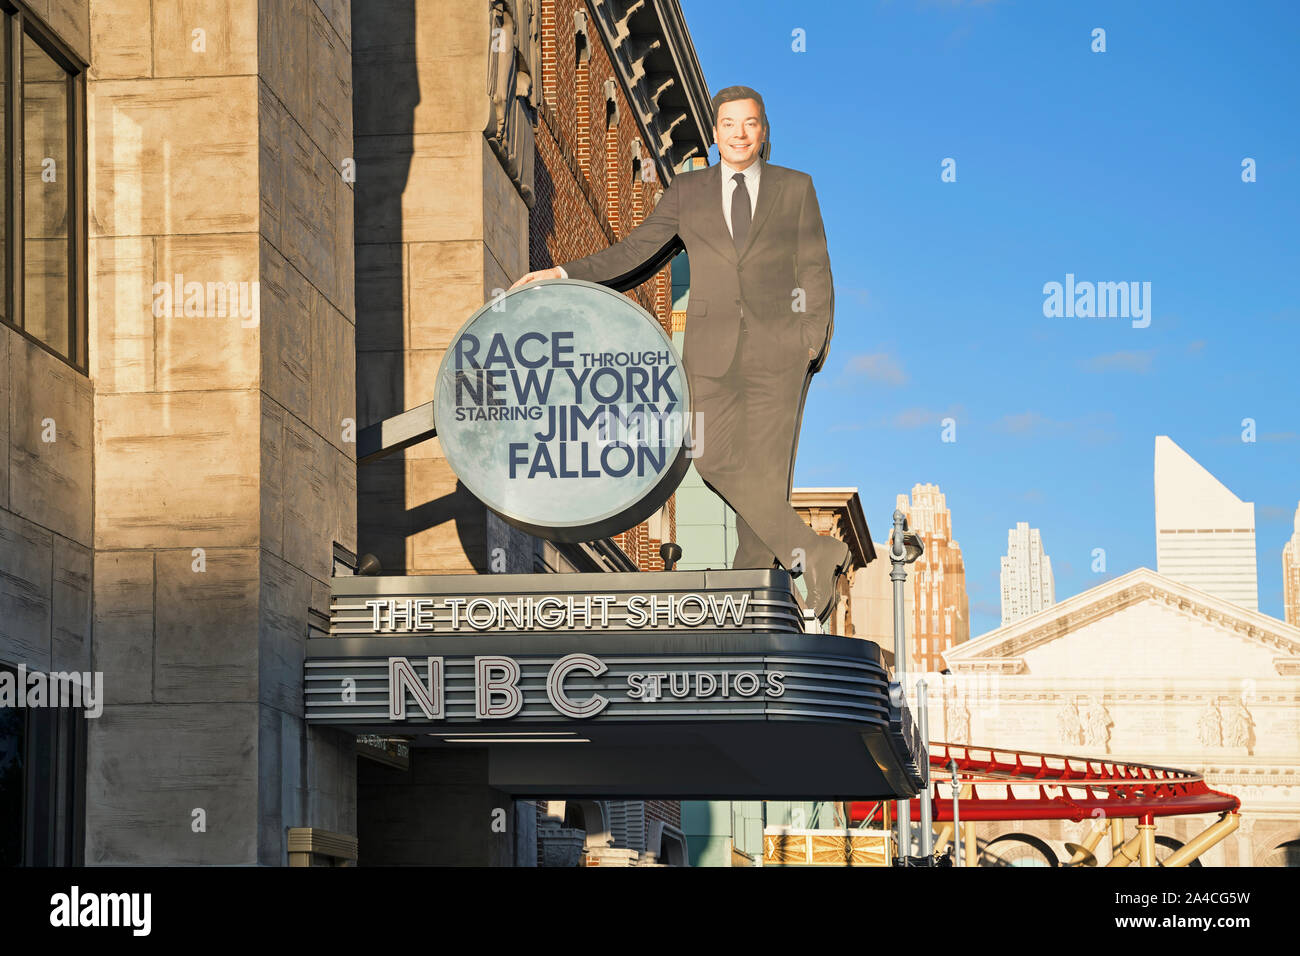 Jimmy Fallon di gara attraverso New York Ride, Tonight Show NBC, Universal Studios, Orlando, Florida, Stati Uniti d'America Foto Stock